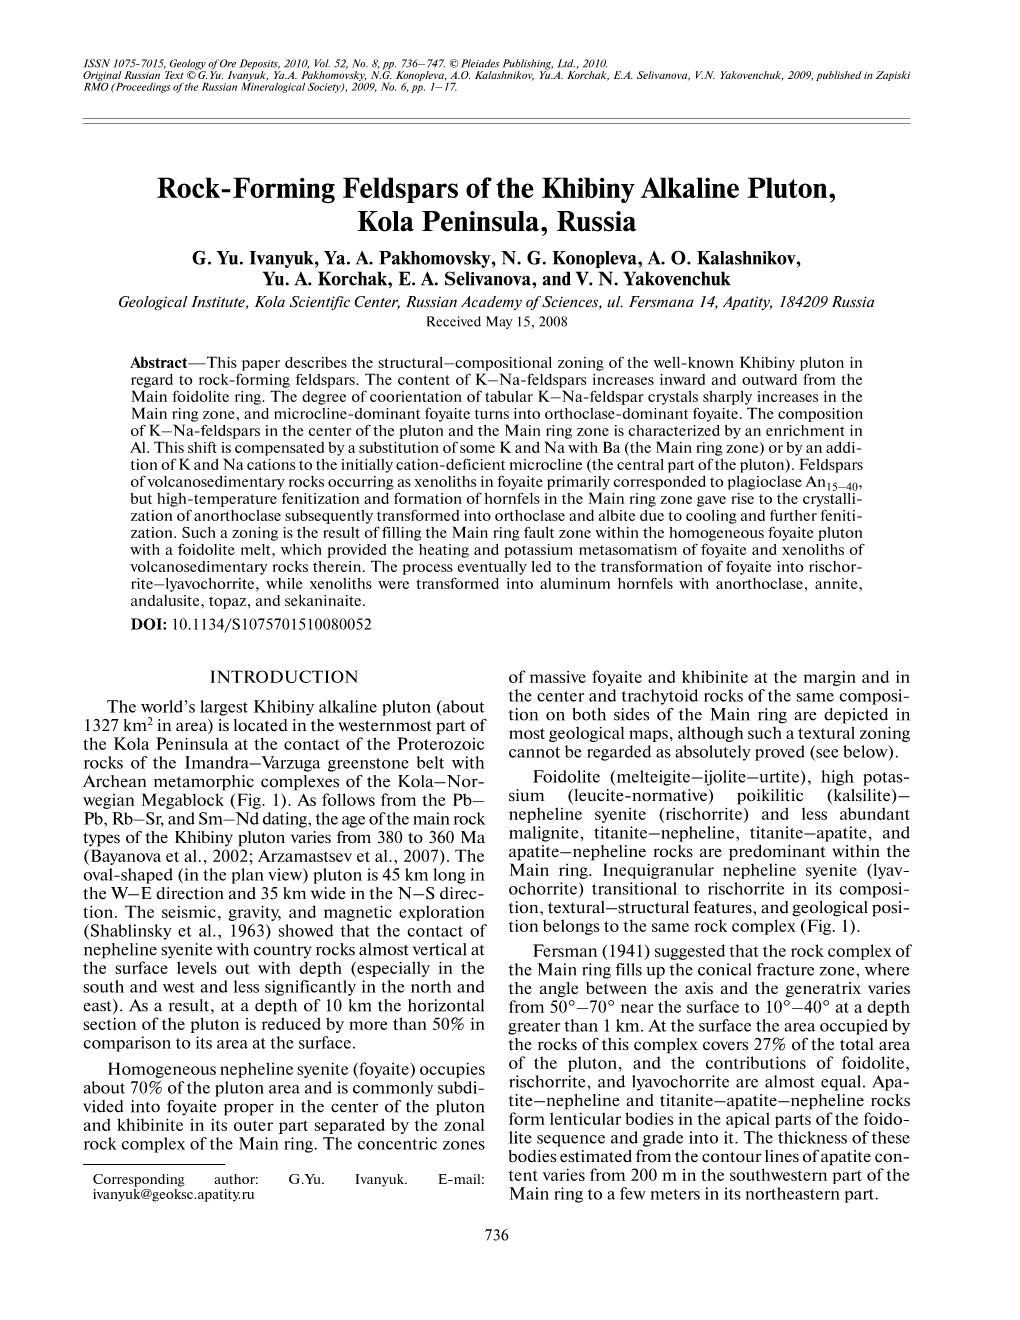 Rock Forming Feldspars of the Khibiny Alkaline Pluton, Kola